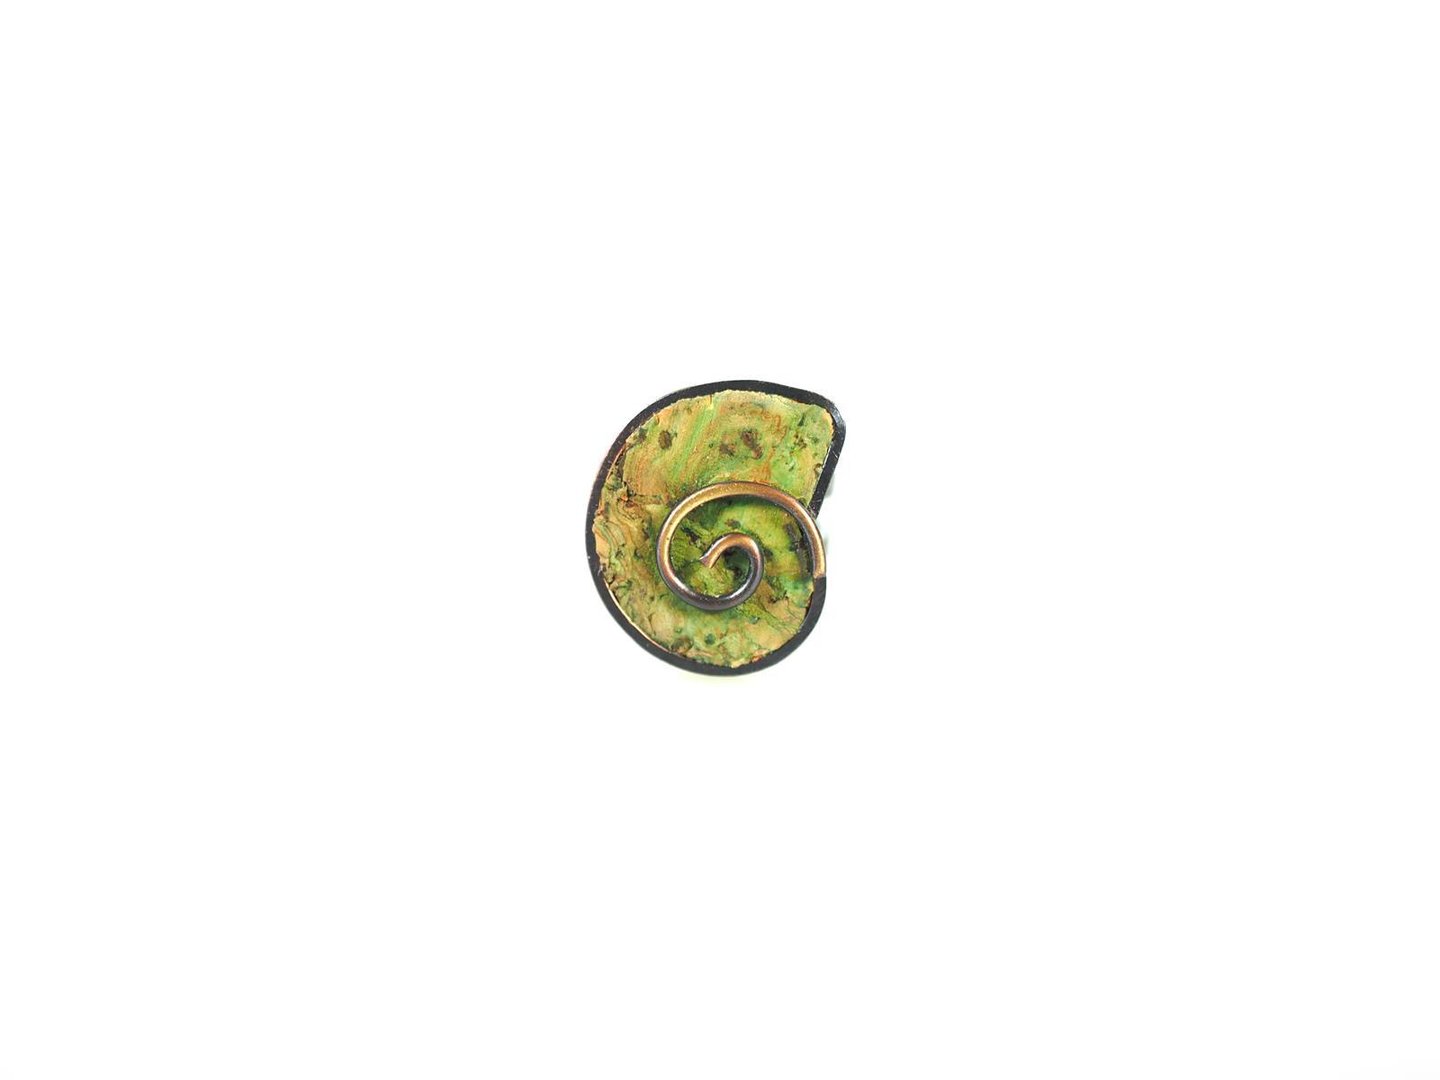 B U R 003.50 Gr Ring snail 1